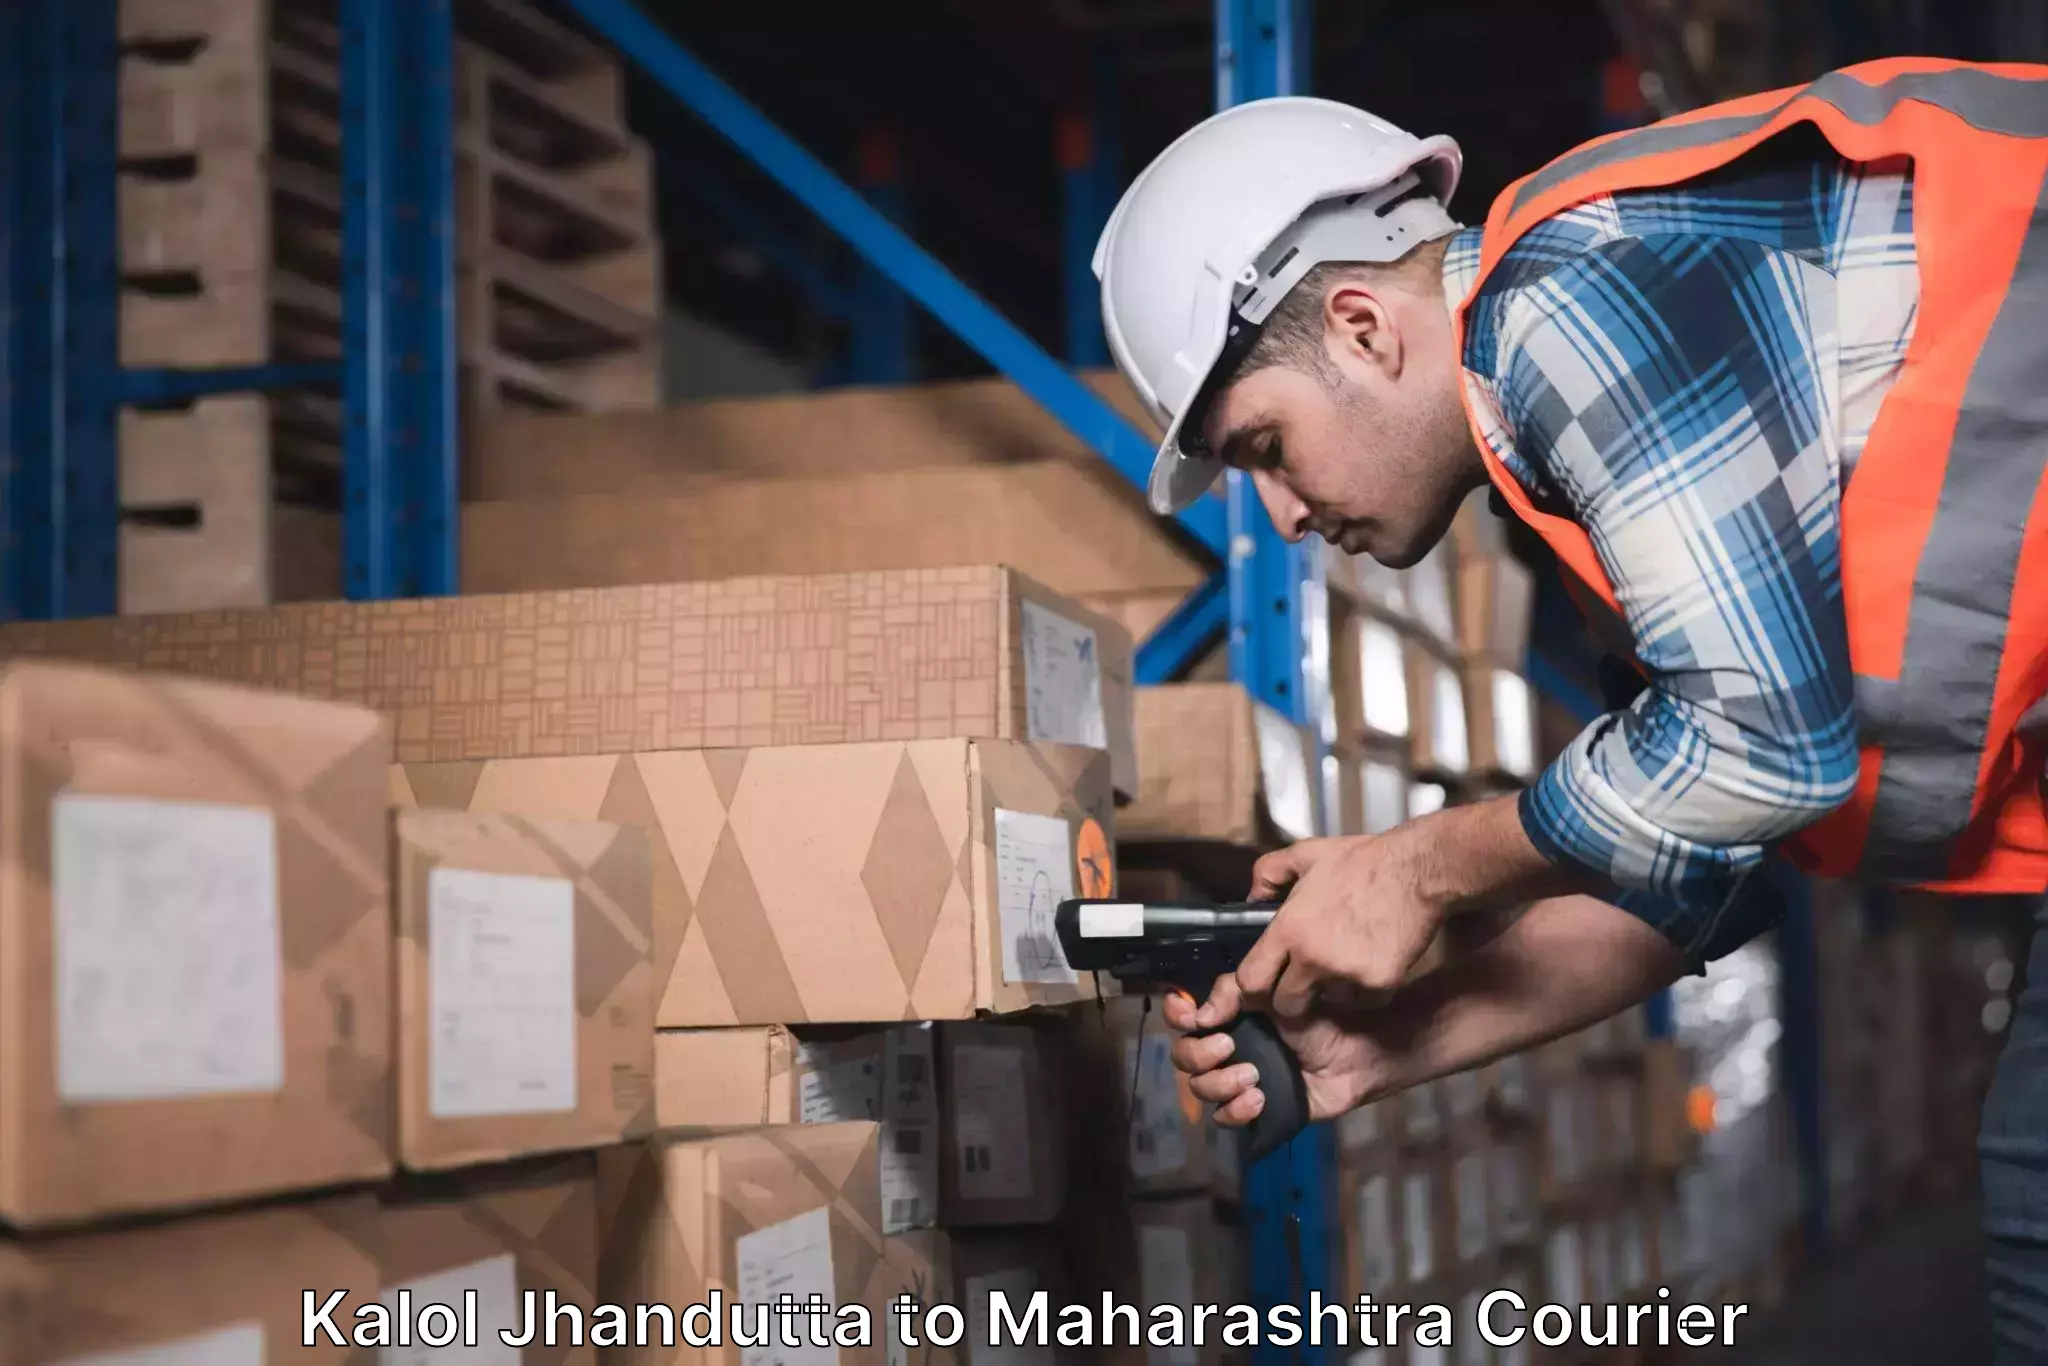 24/7 shipping services Kalol Jhandutta to Pune